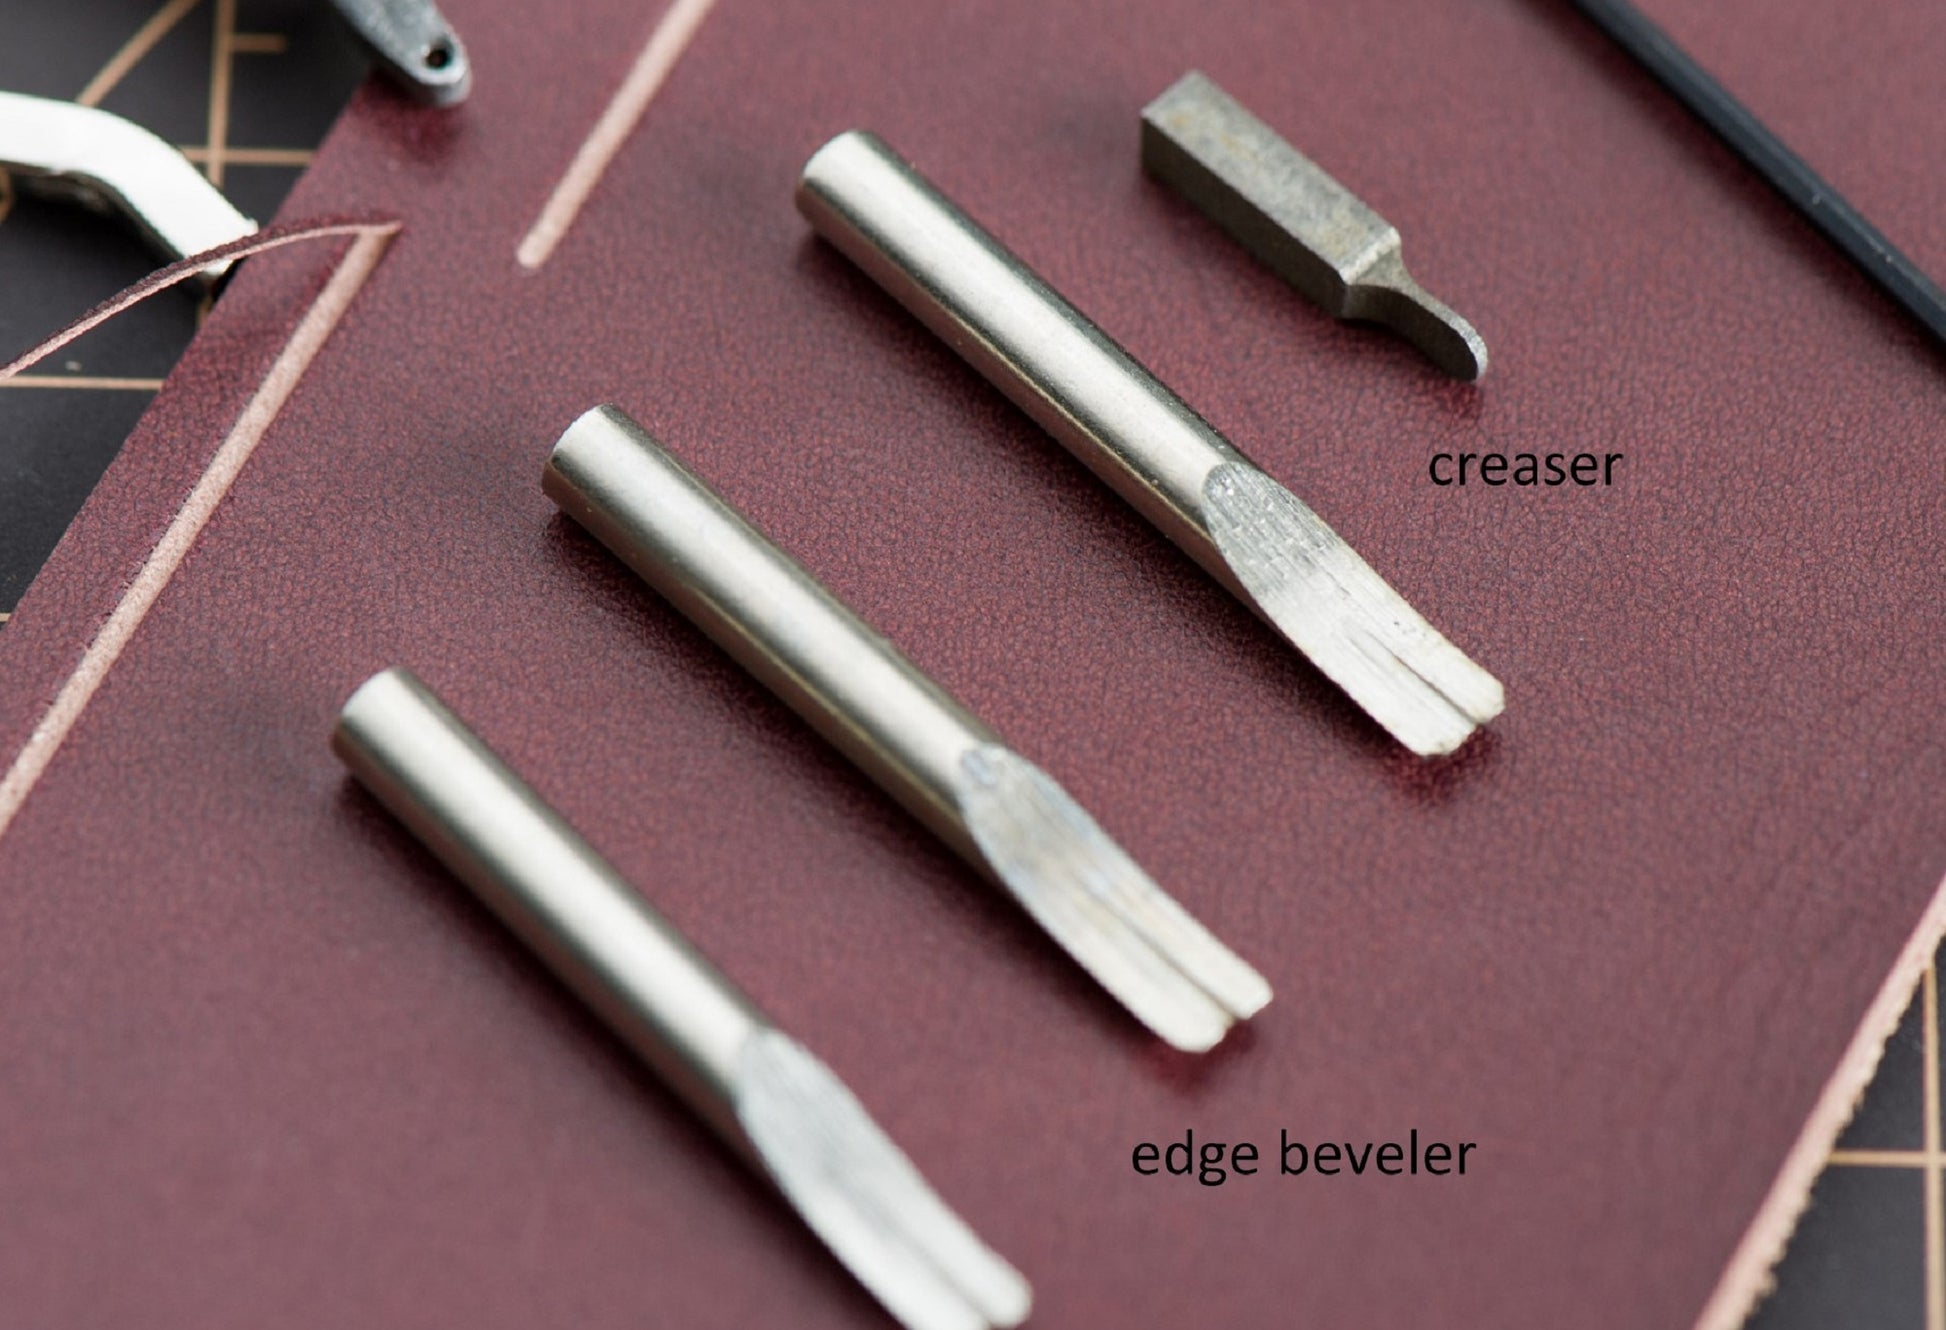 Leather Edge Beveler D2 Steel